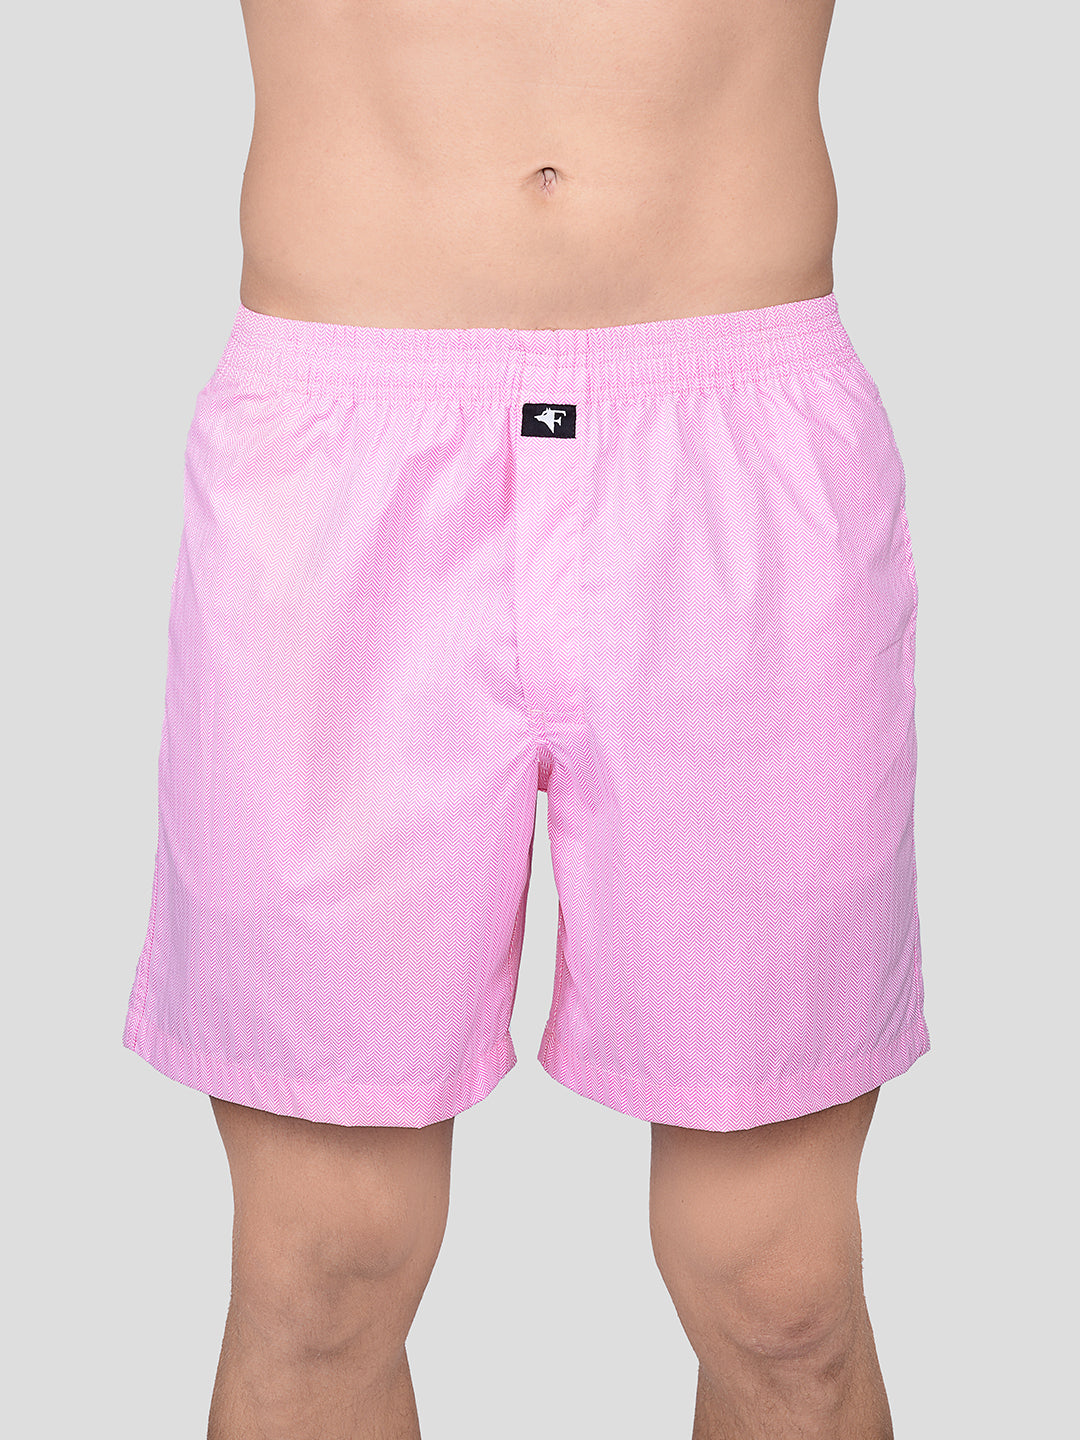 Boxer Shorts for Men  Buy Pure Cotton Shorts for Men Online – VIP